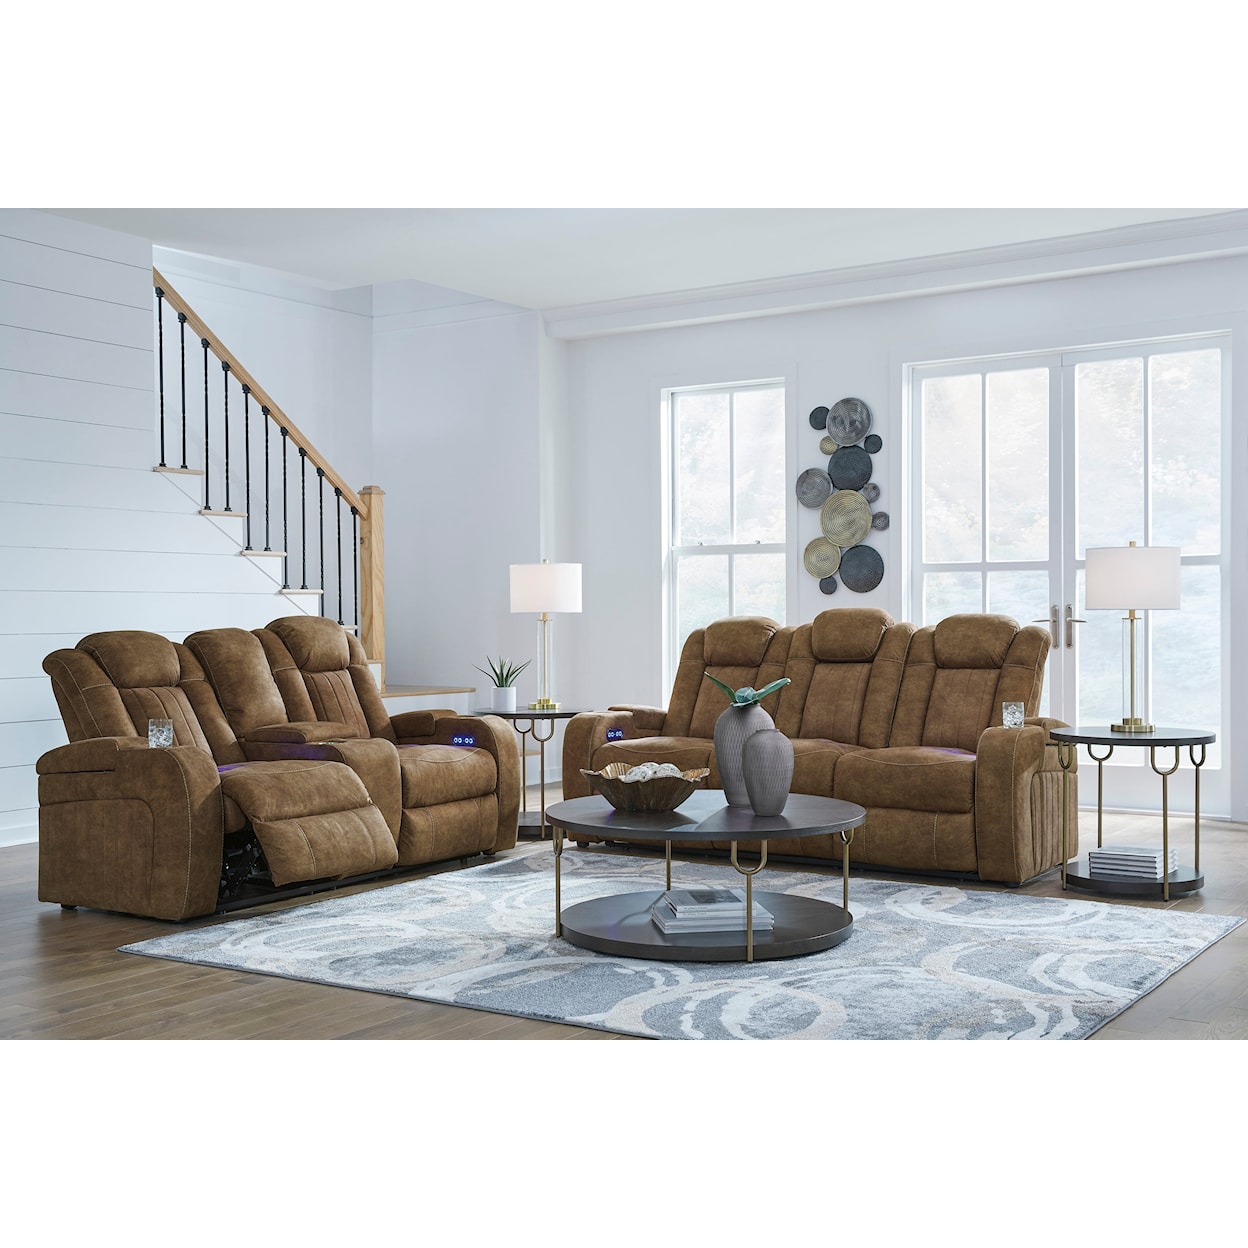 Ashley Furniture Signature Design Wolfridge 2-Piece Living Room Set